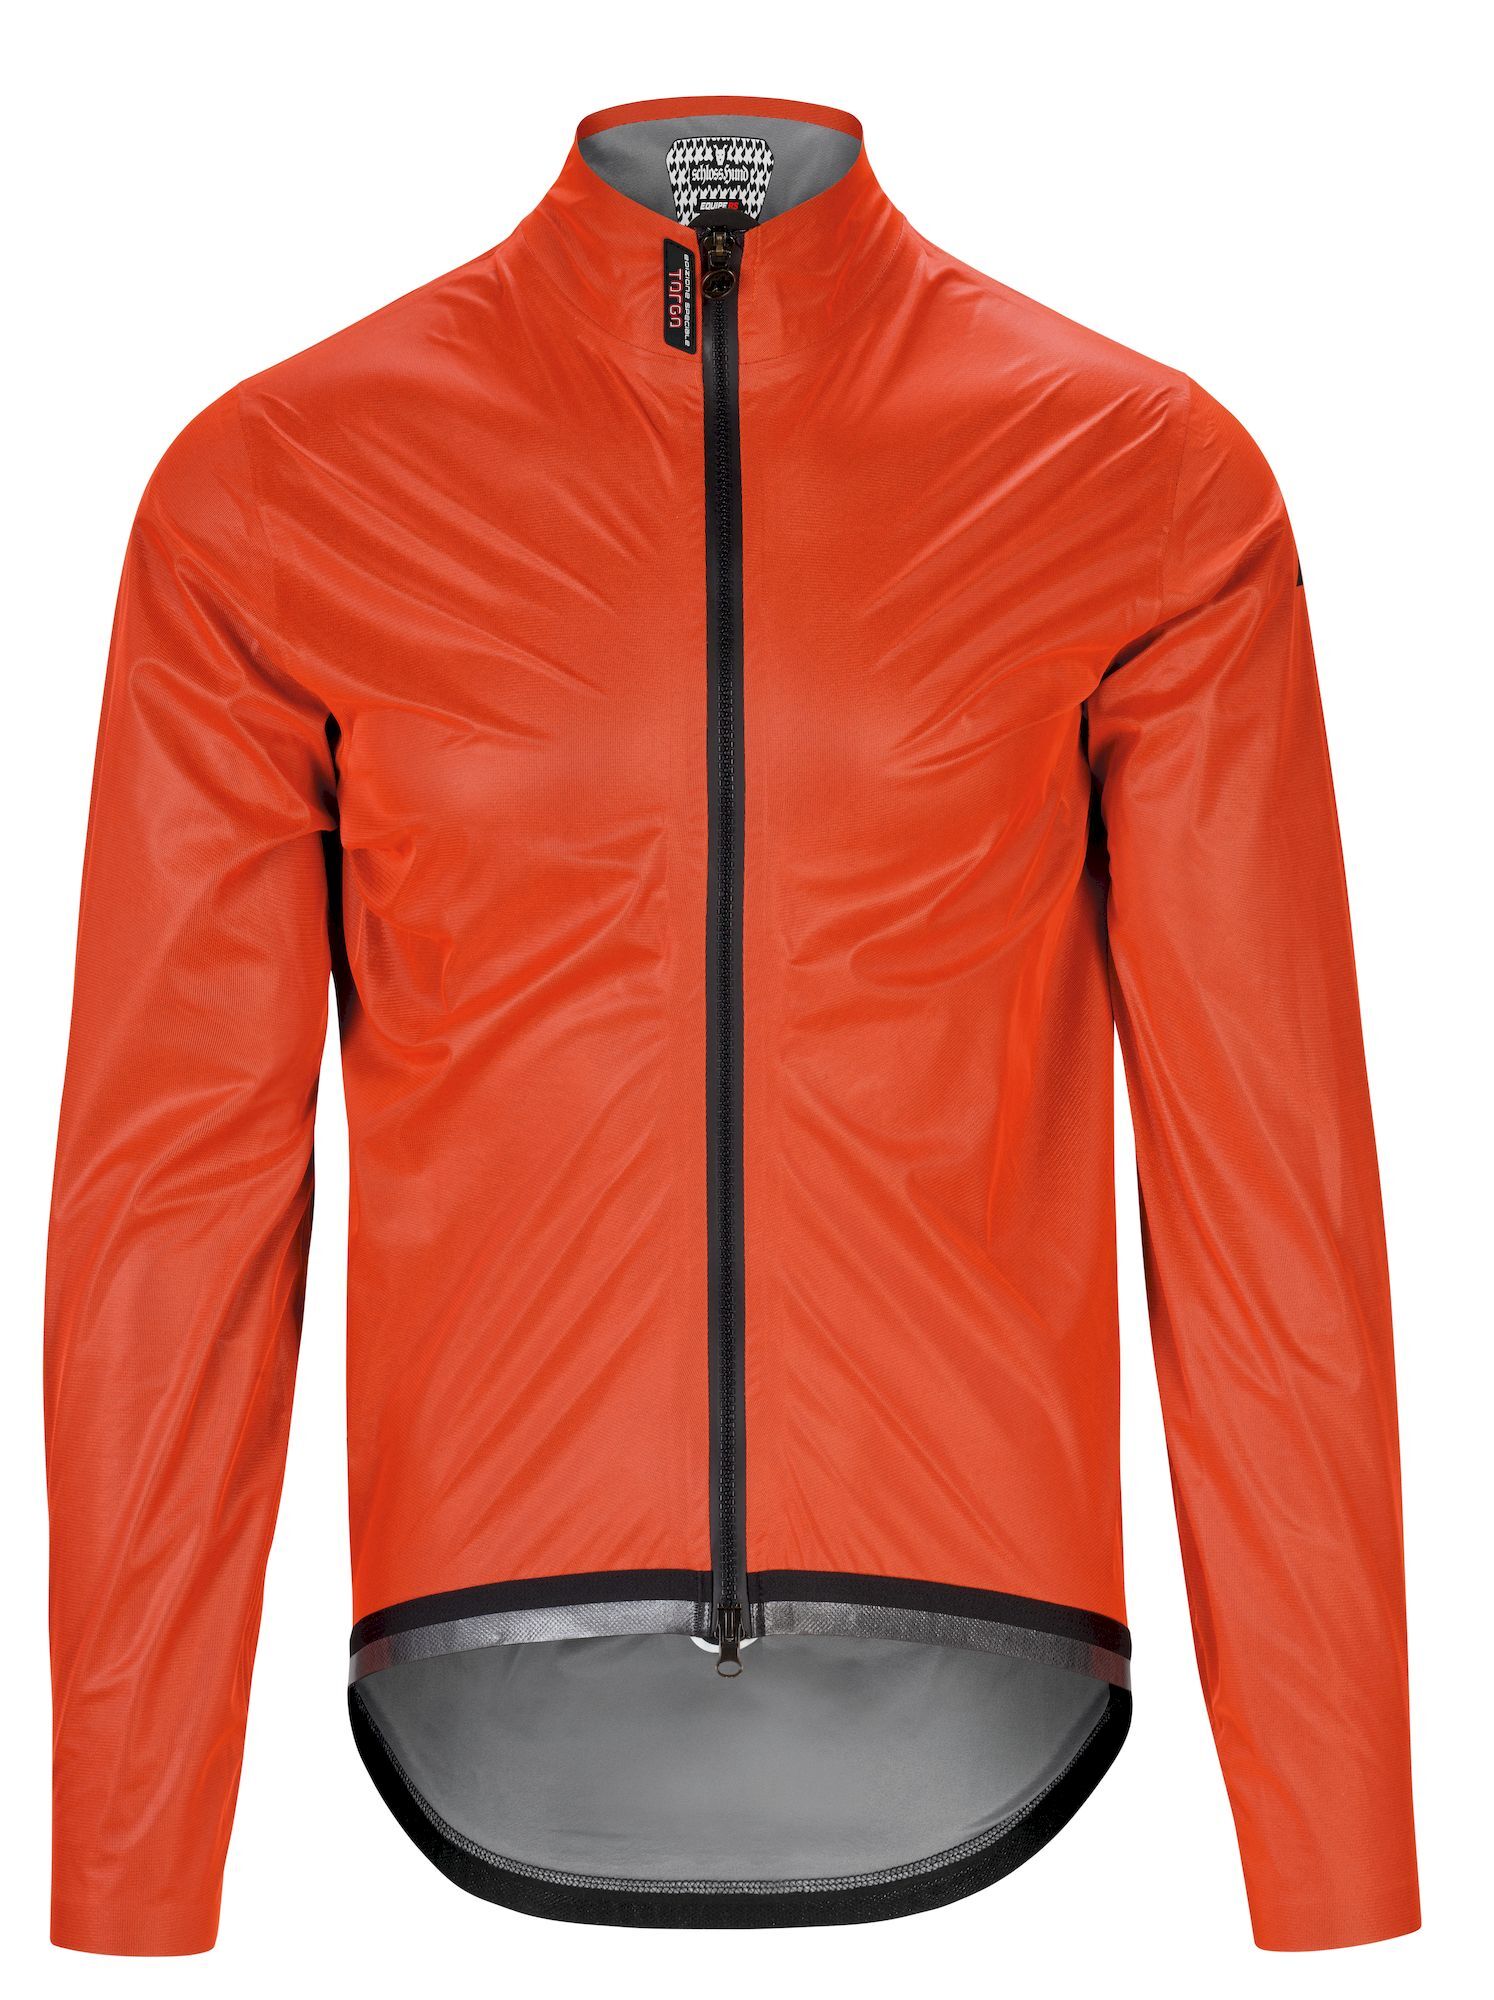 Assos Equipe RS Rain Jacket Targa - Waterproof jacket - Men's